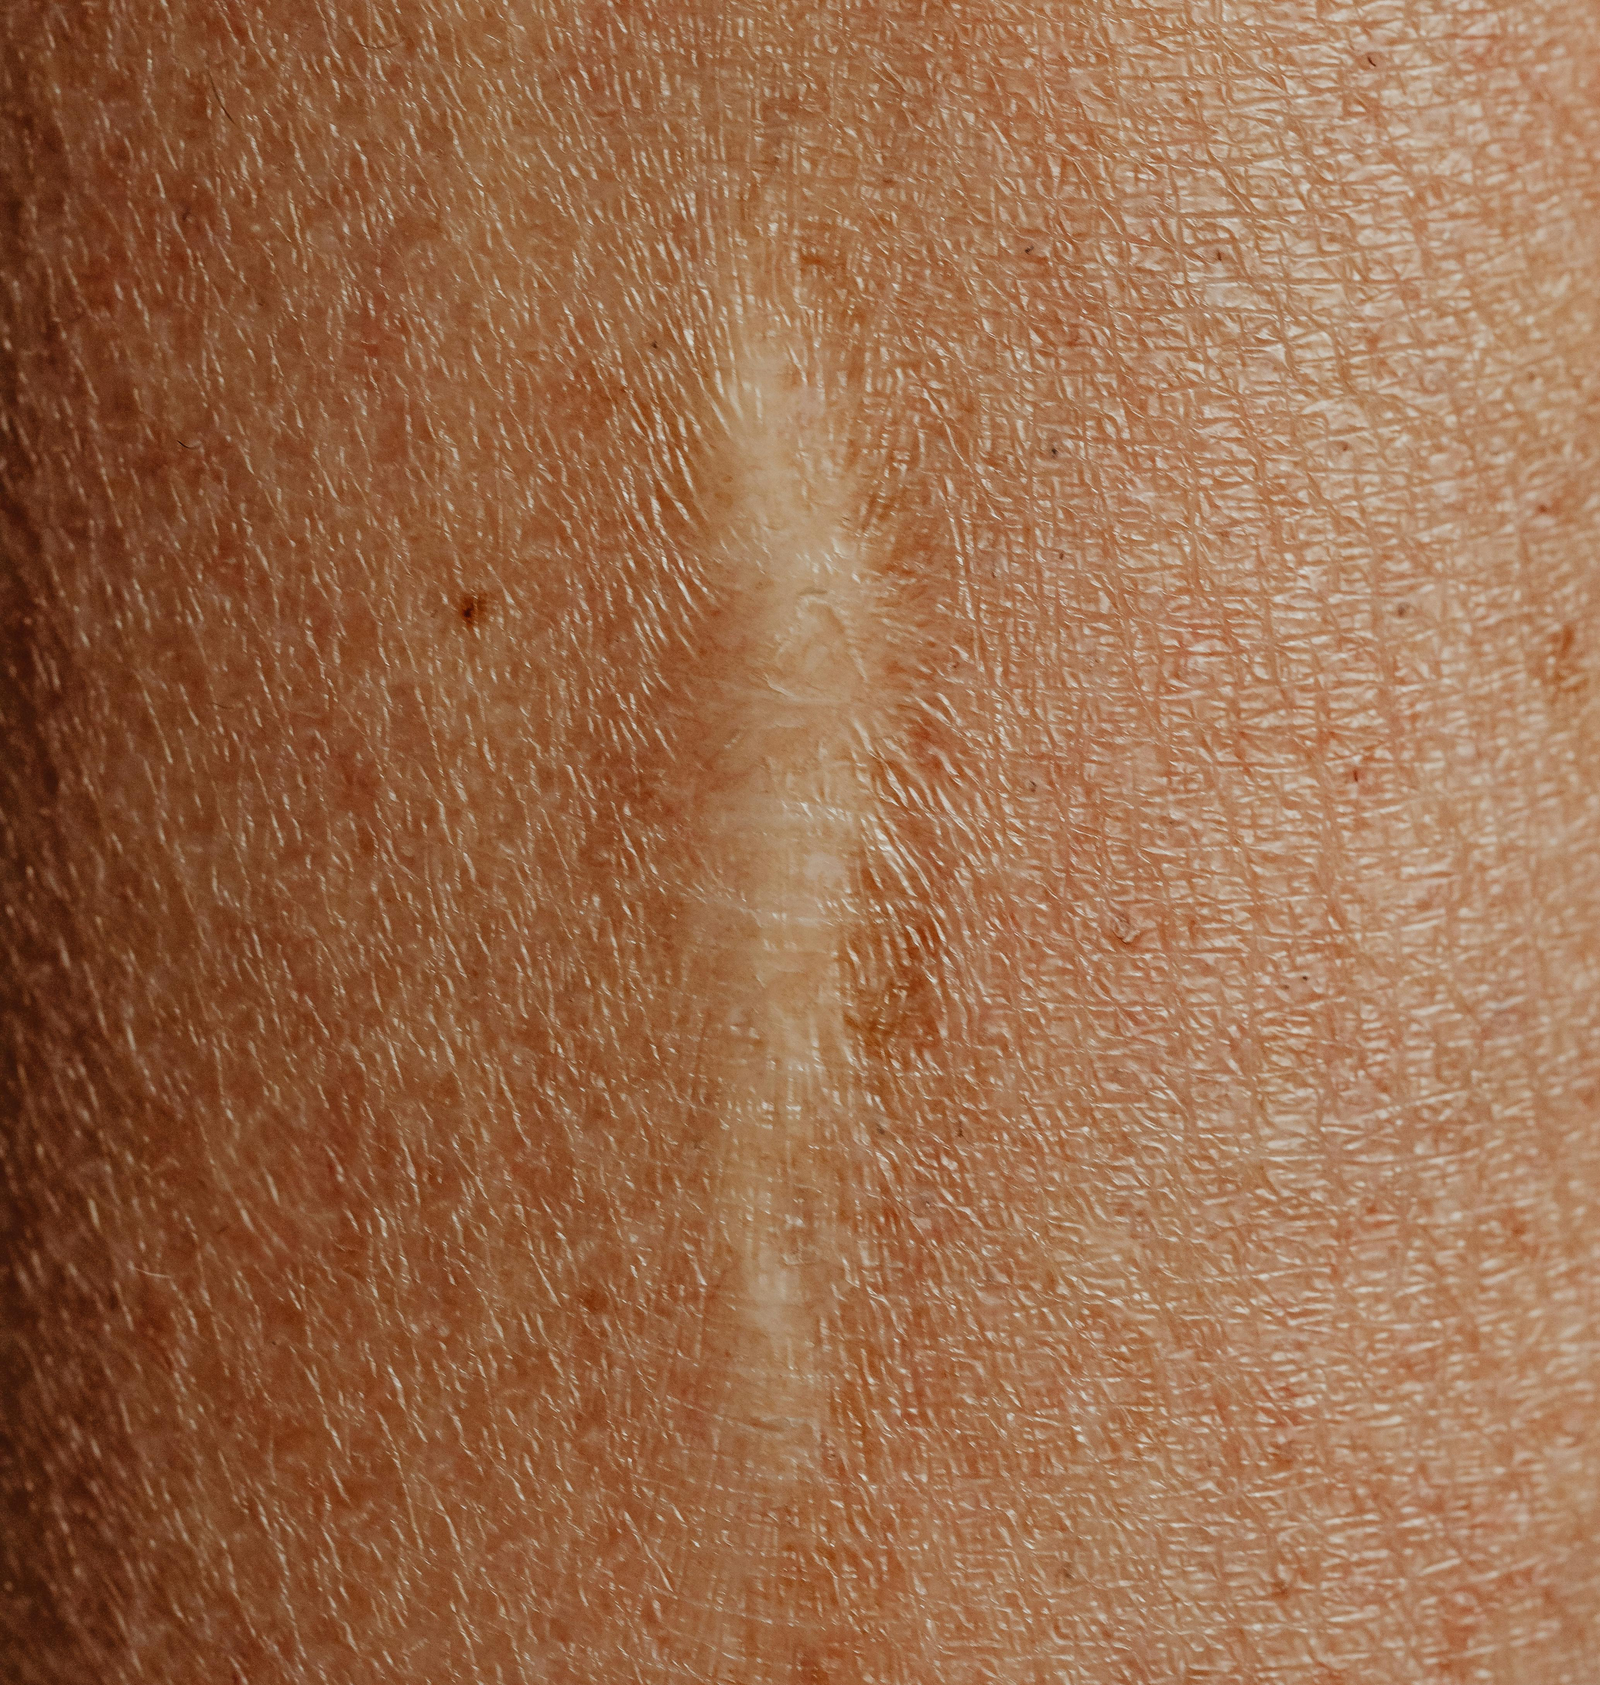 Close up Shot of Healed Scar on skin